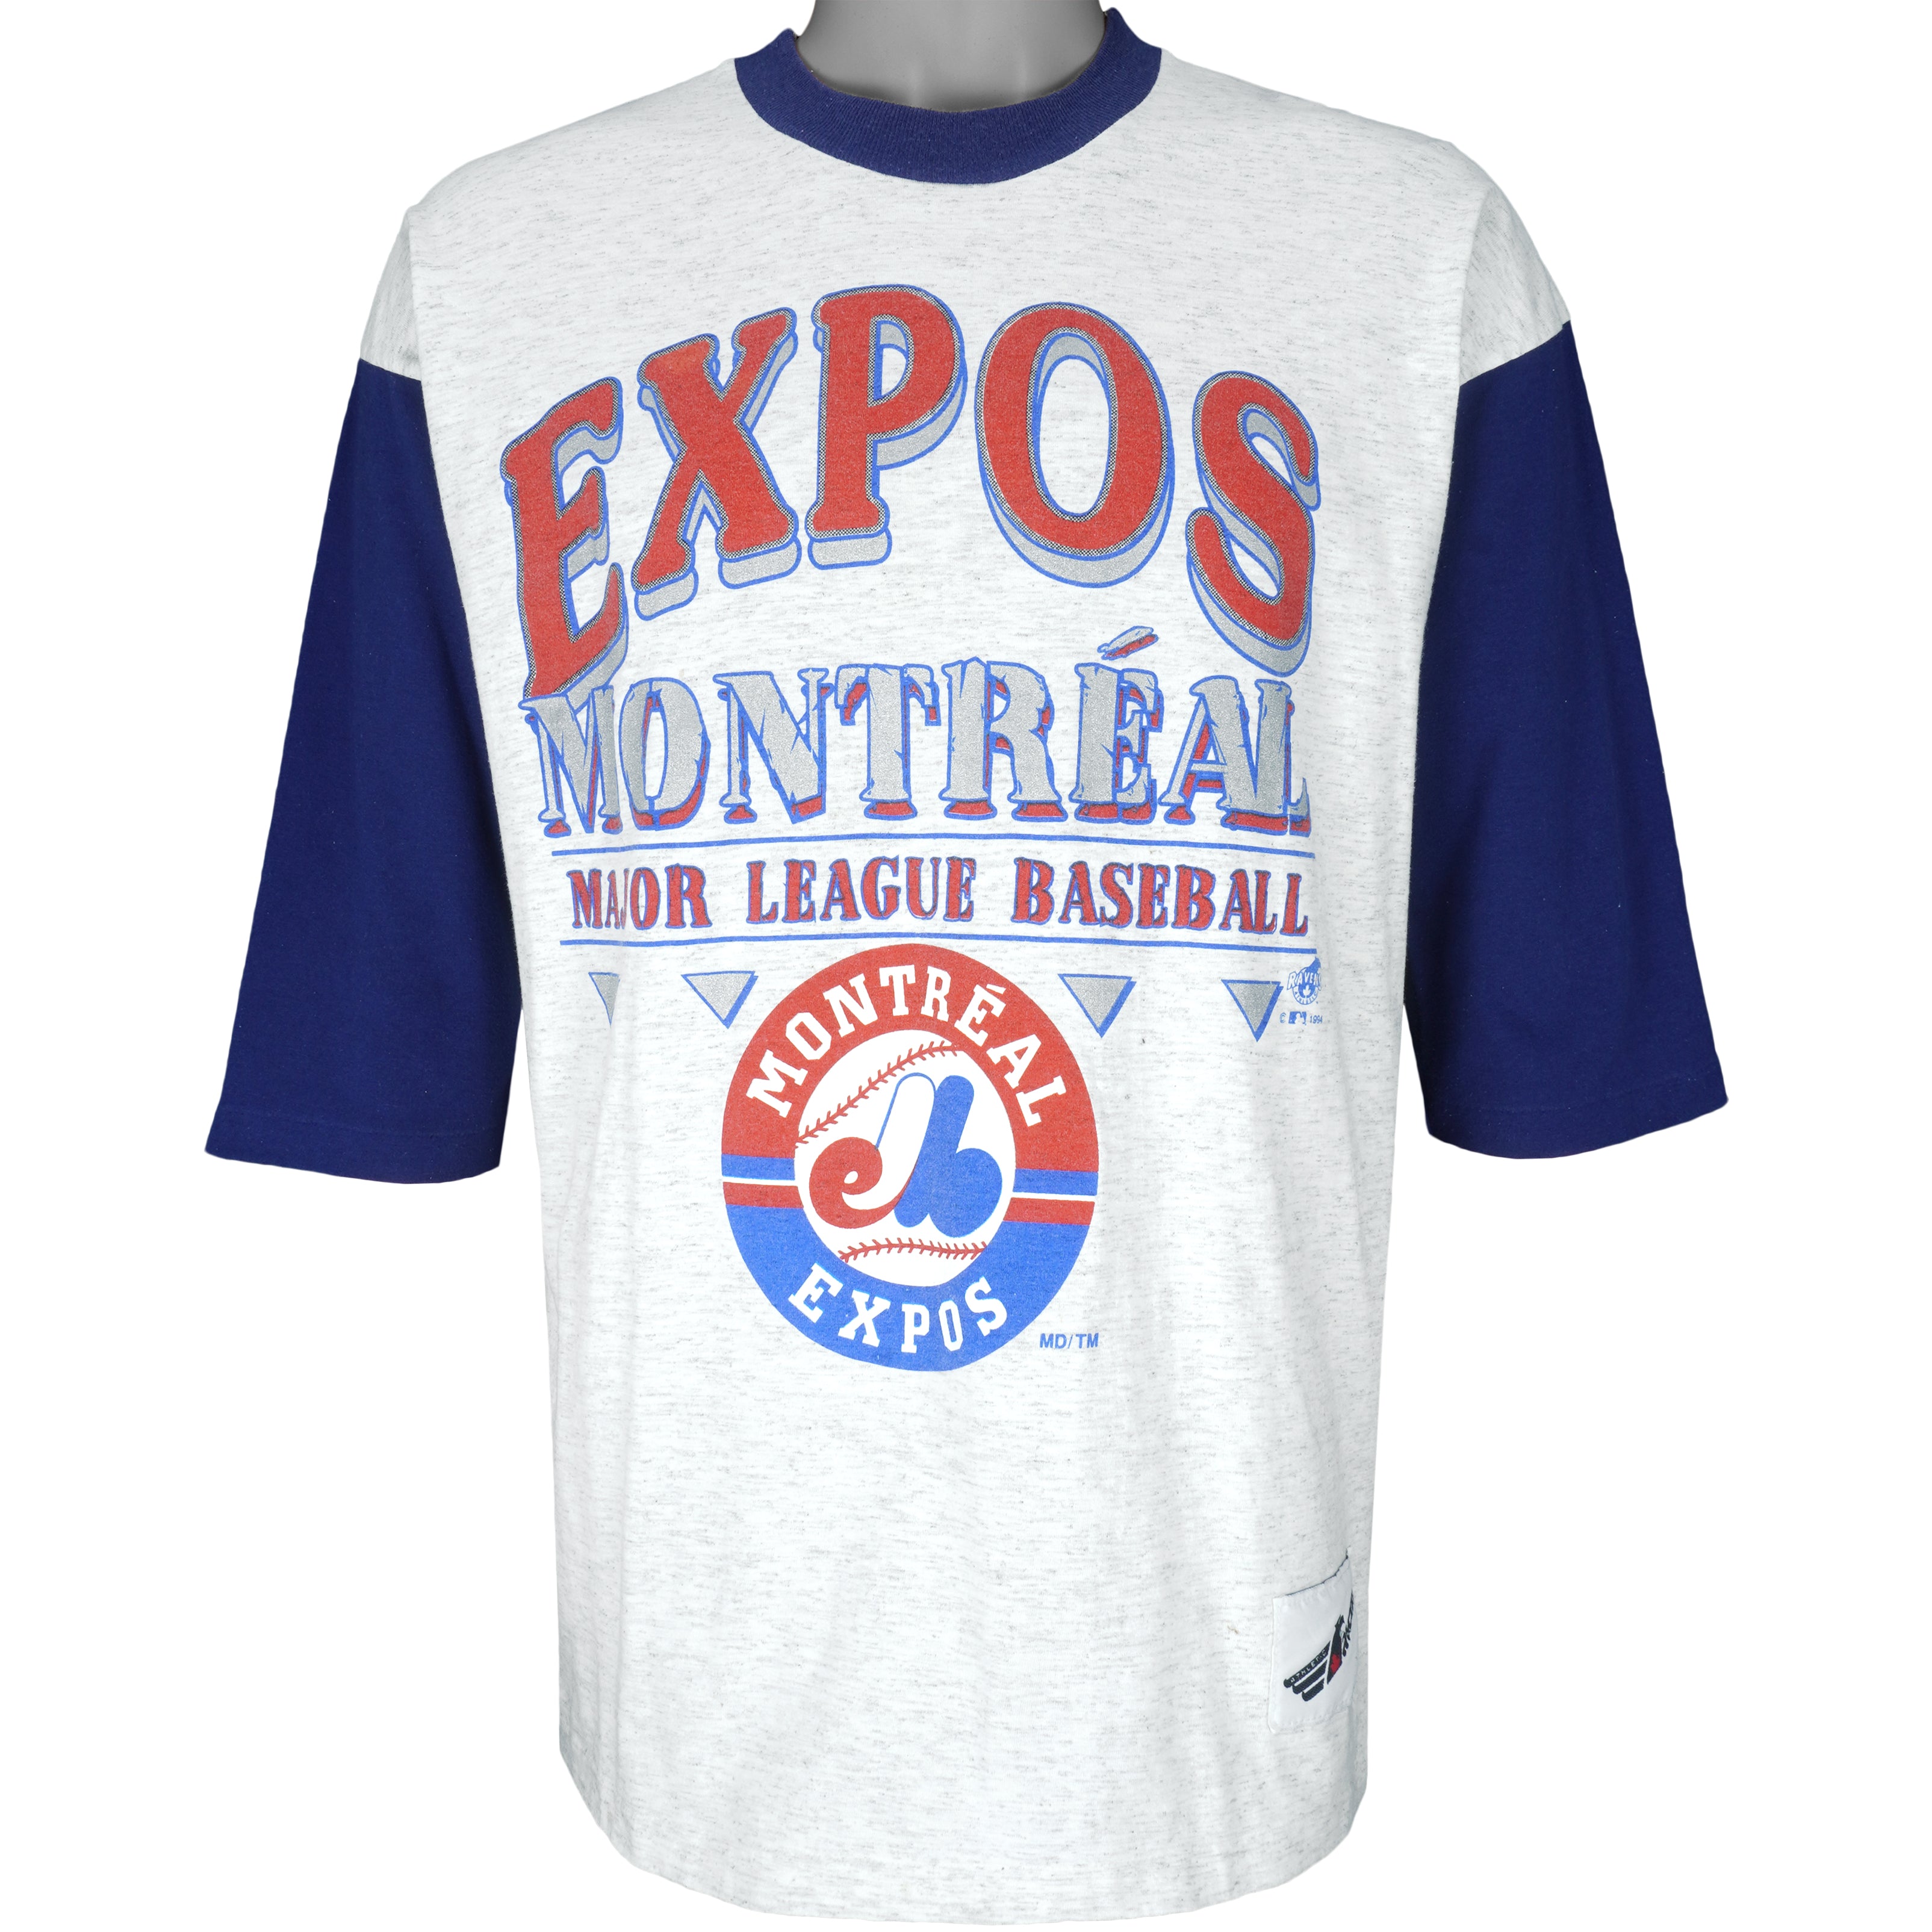 Vintage Expos Baseball Shirt XLarge